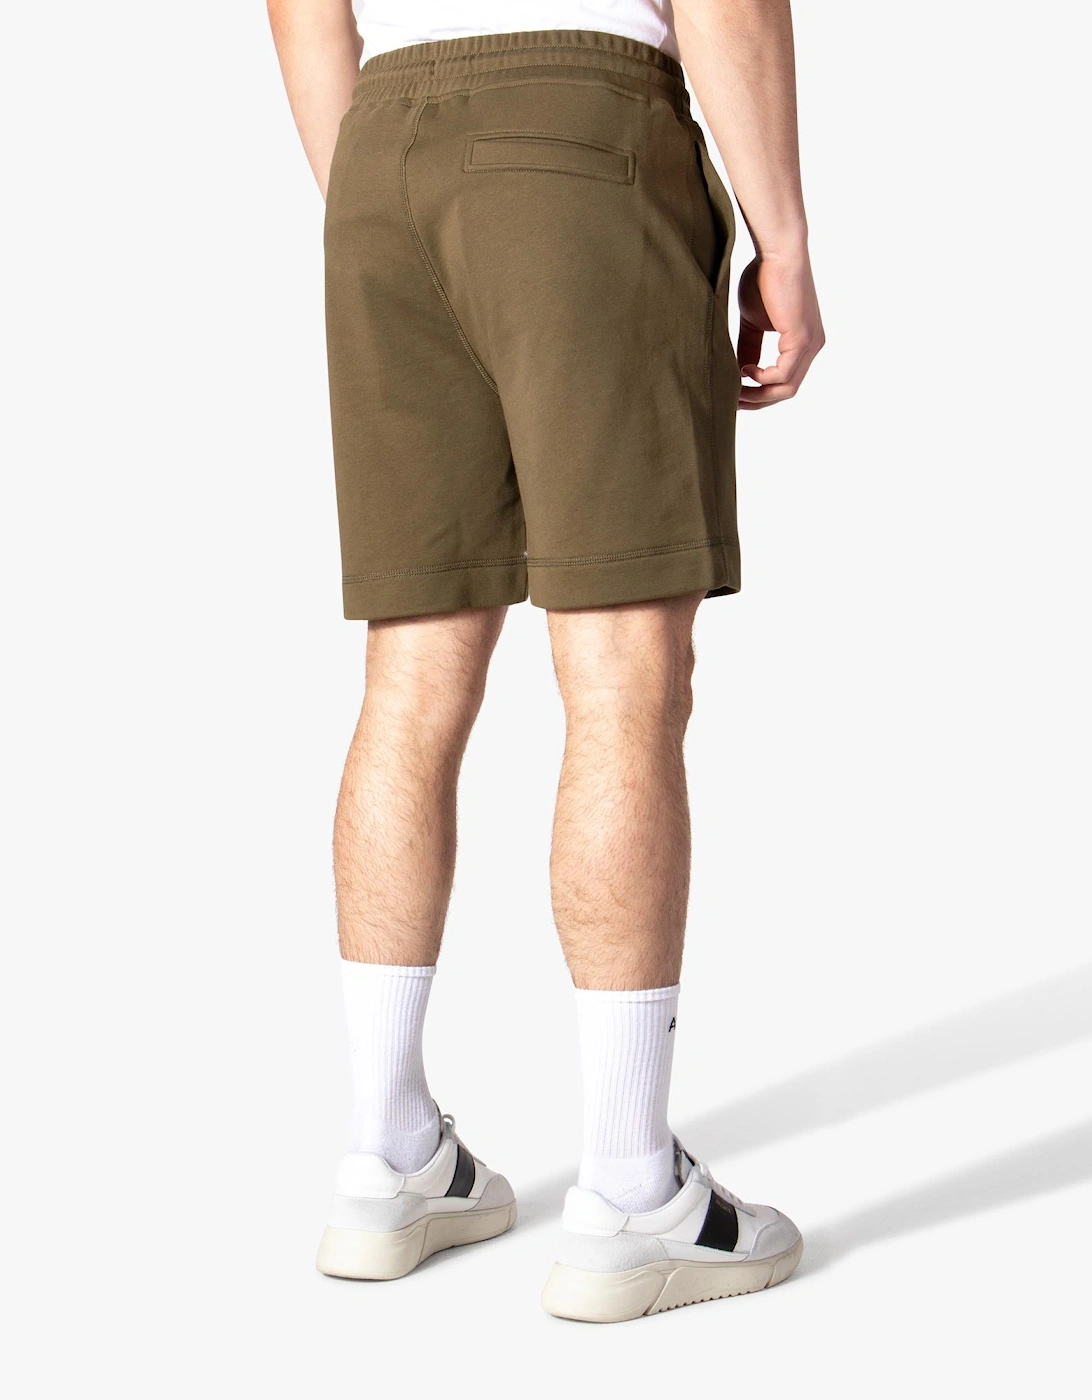 Regular Fit Sewalk Sweat Shorts